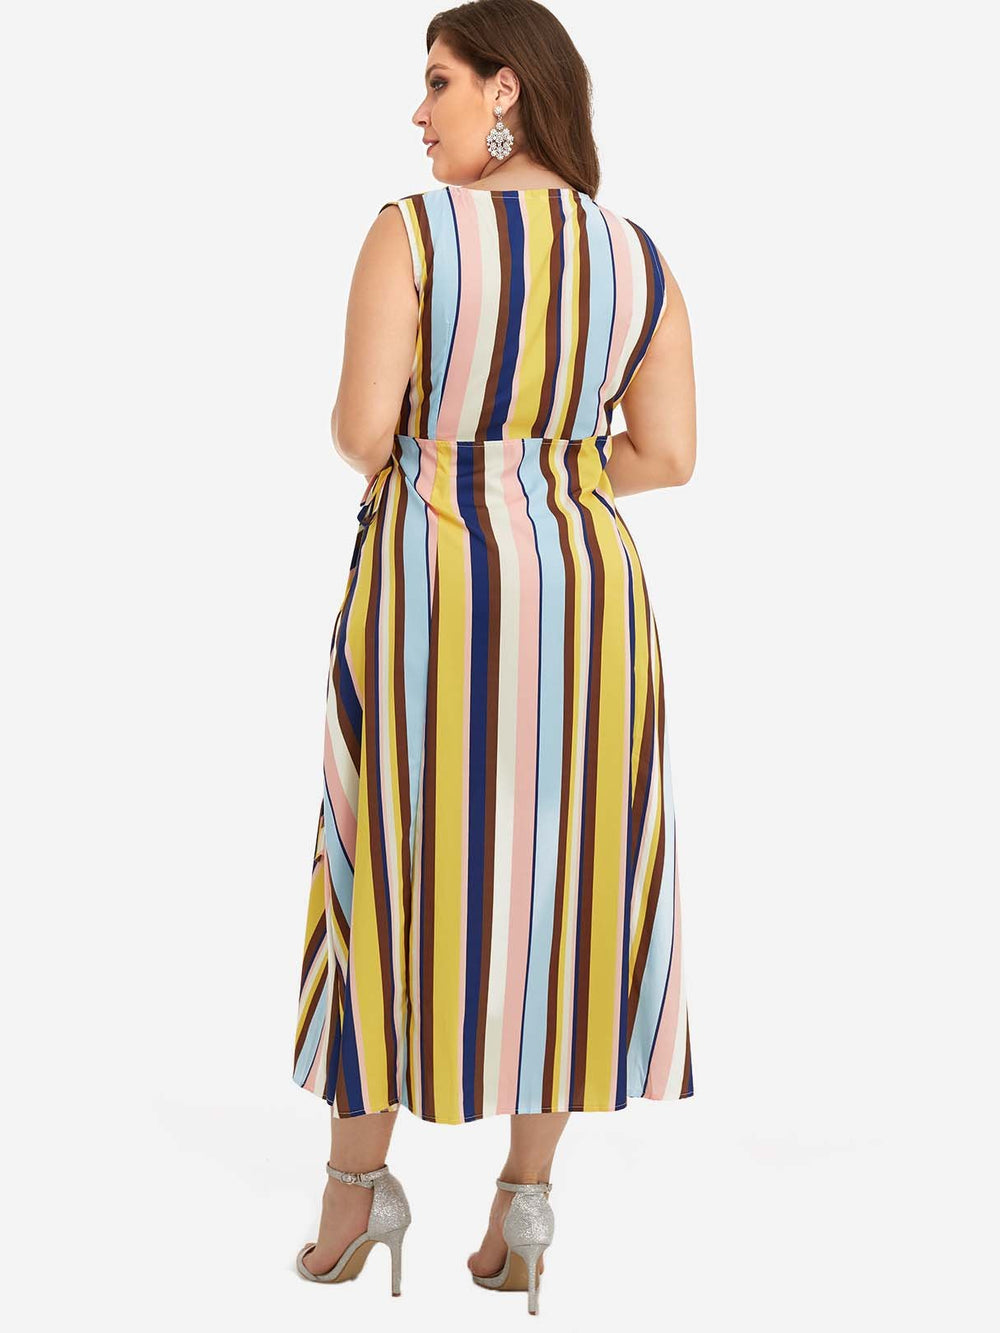 Womens Striped Plus Size Dresses